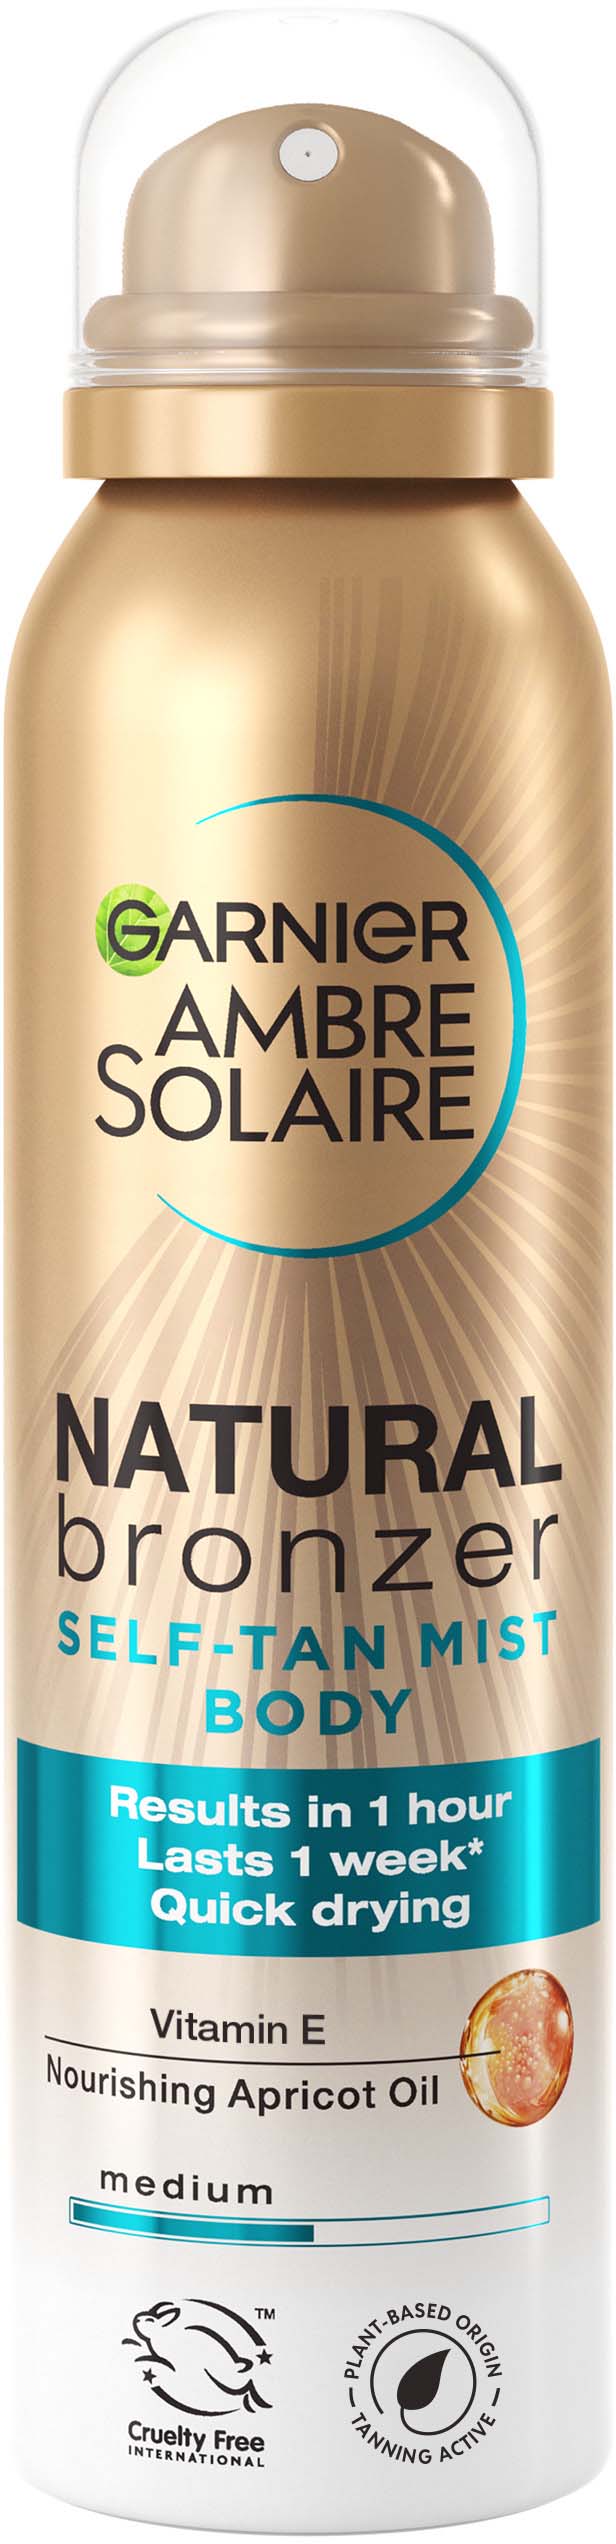 Garnier Ambre Solaire Natural ml 150 Body Self Tan Mist Bronzer